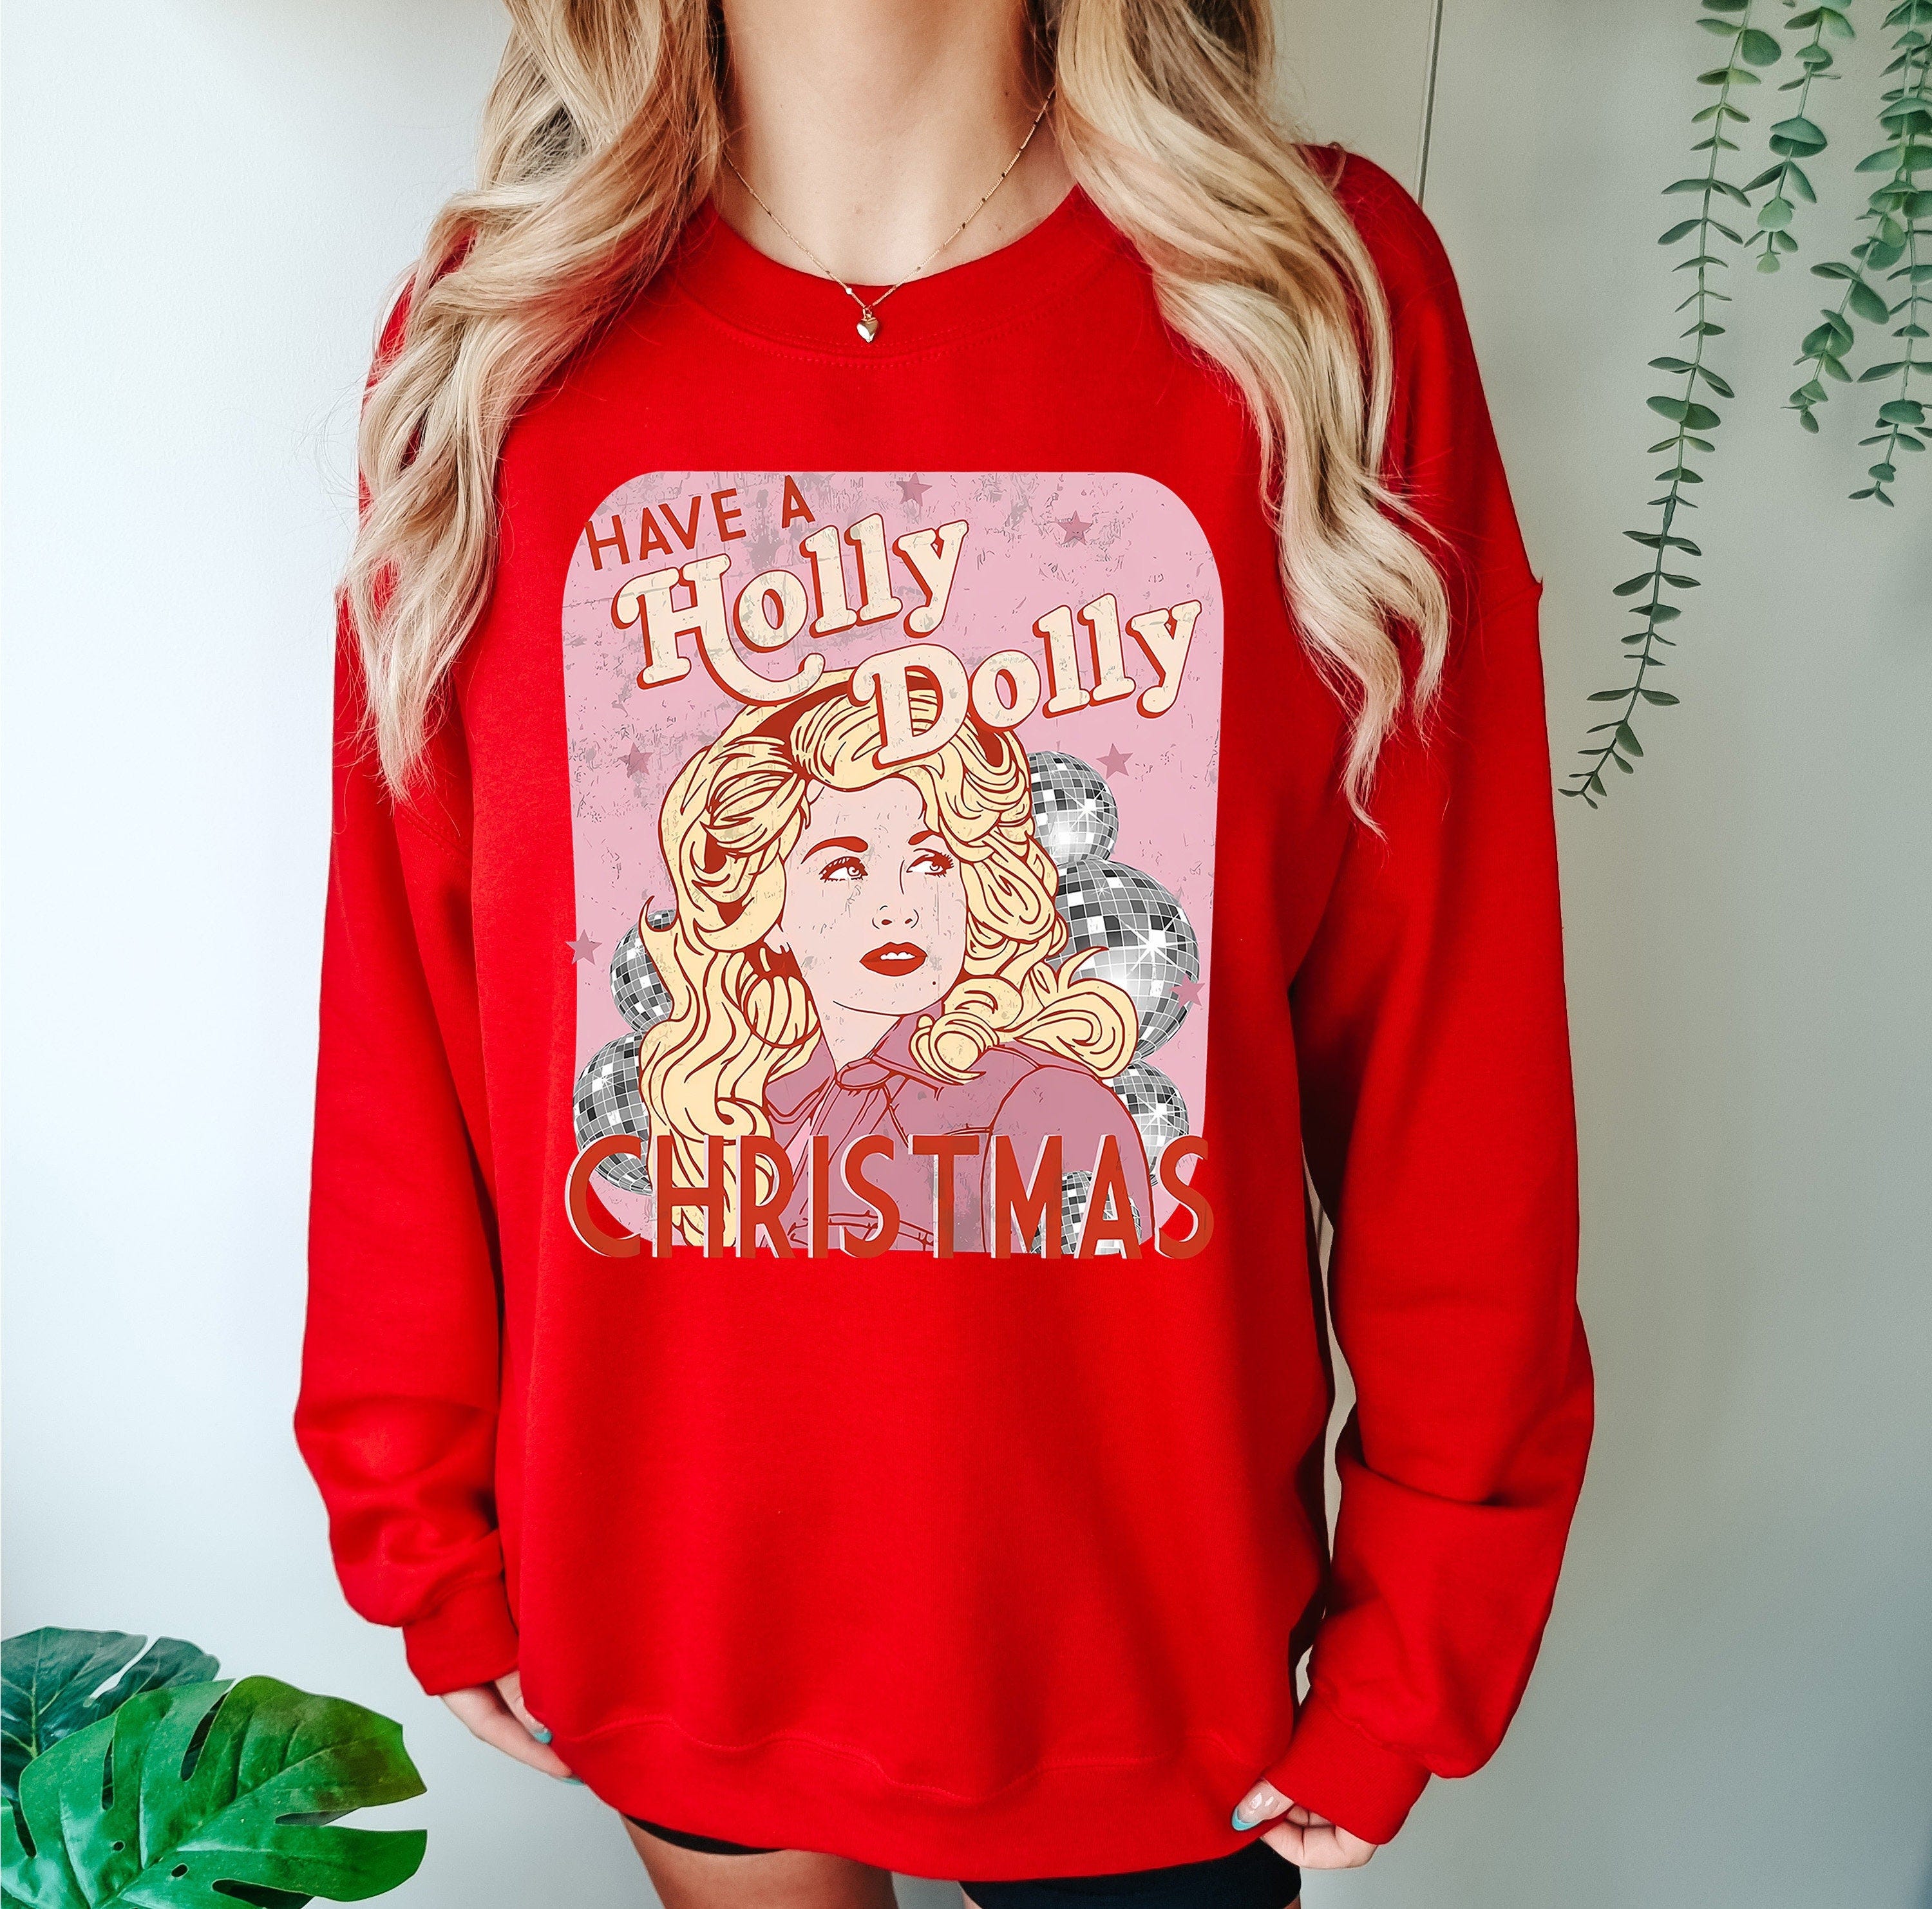 Holly Dolly Retro Sweatshirt - Christmas Western Xmas Shirt with Dolly Parton Theme